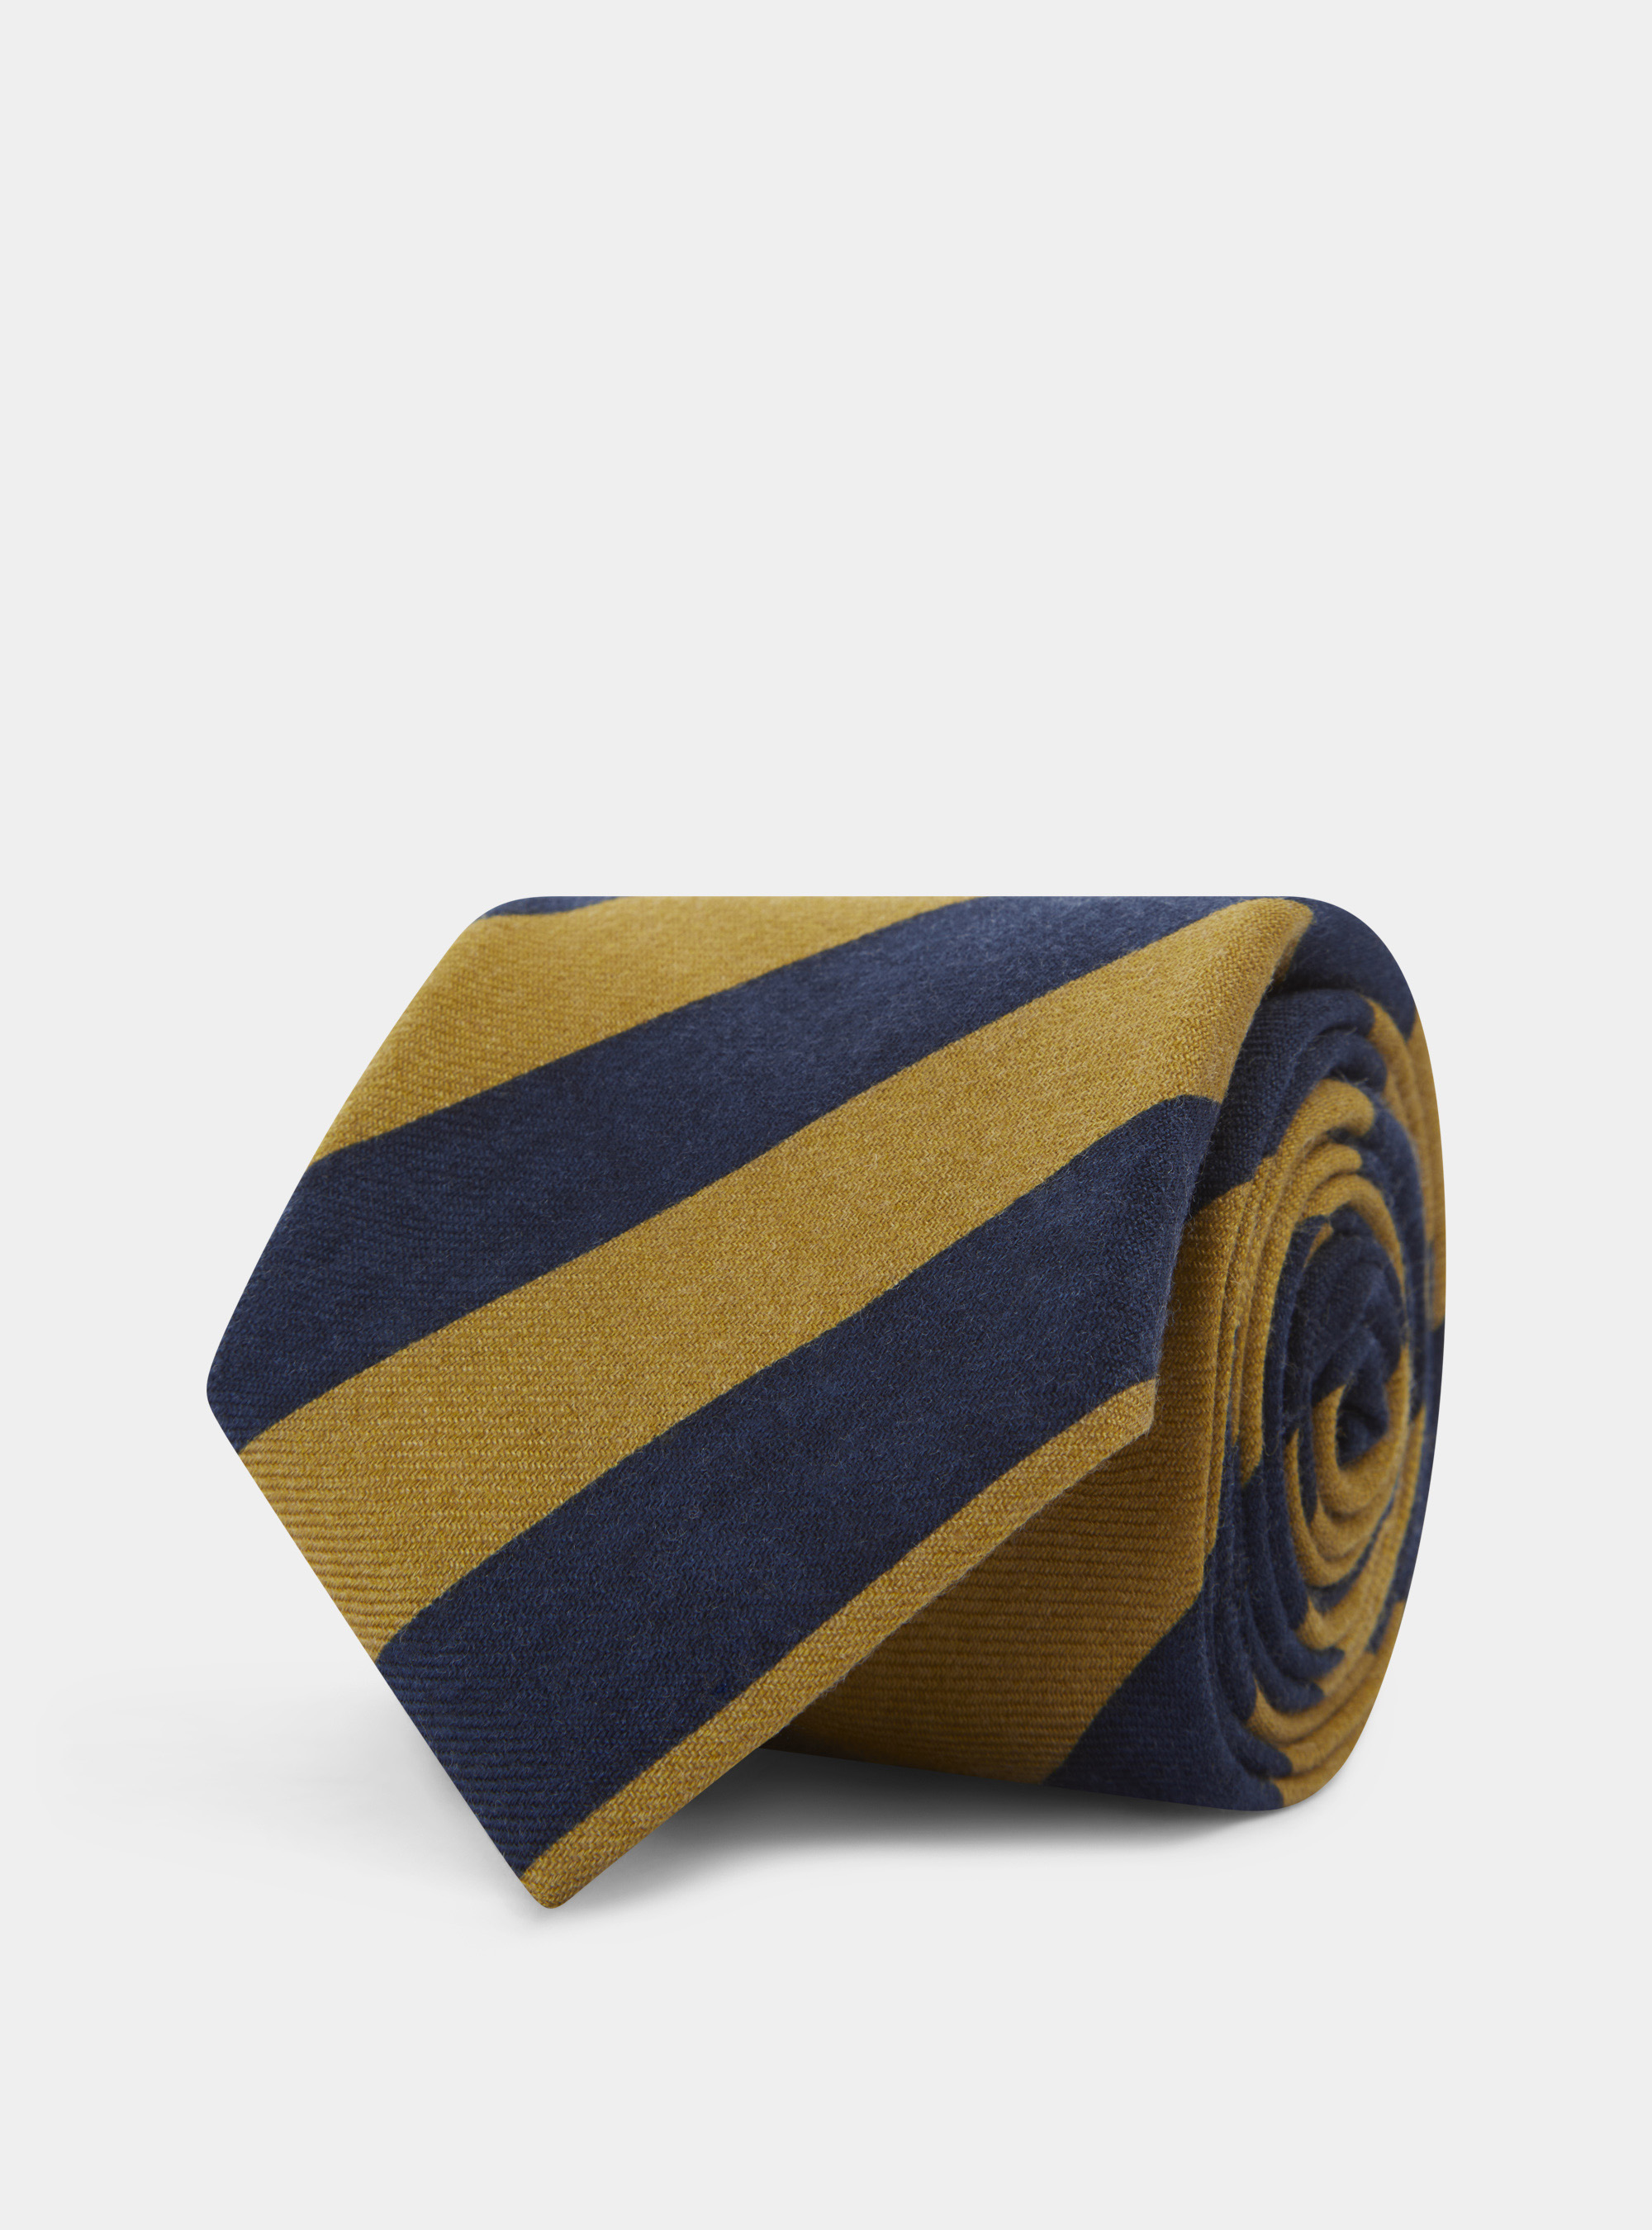 Cravatta in lana rigata | GutteridgeEU | Cravatte Uomo